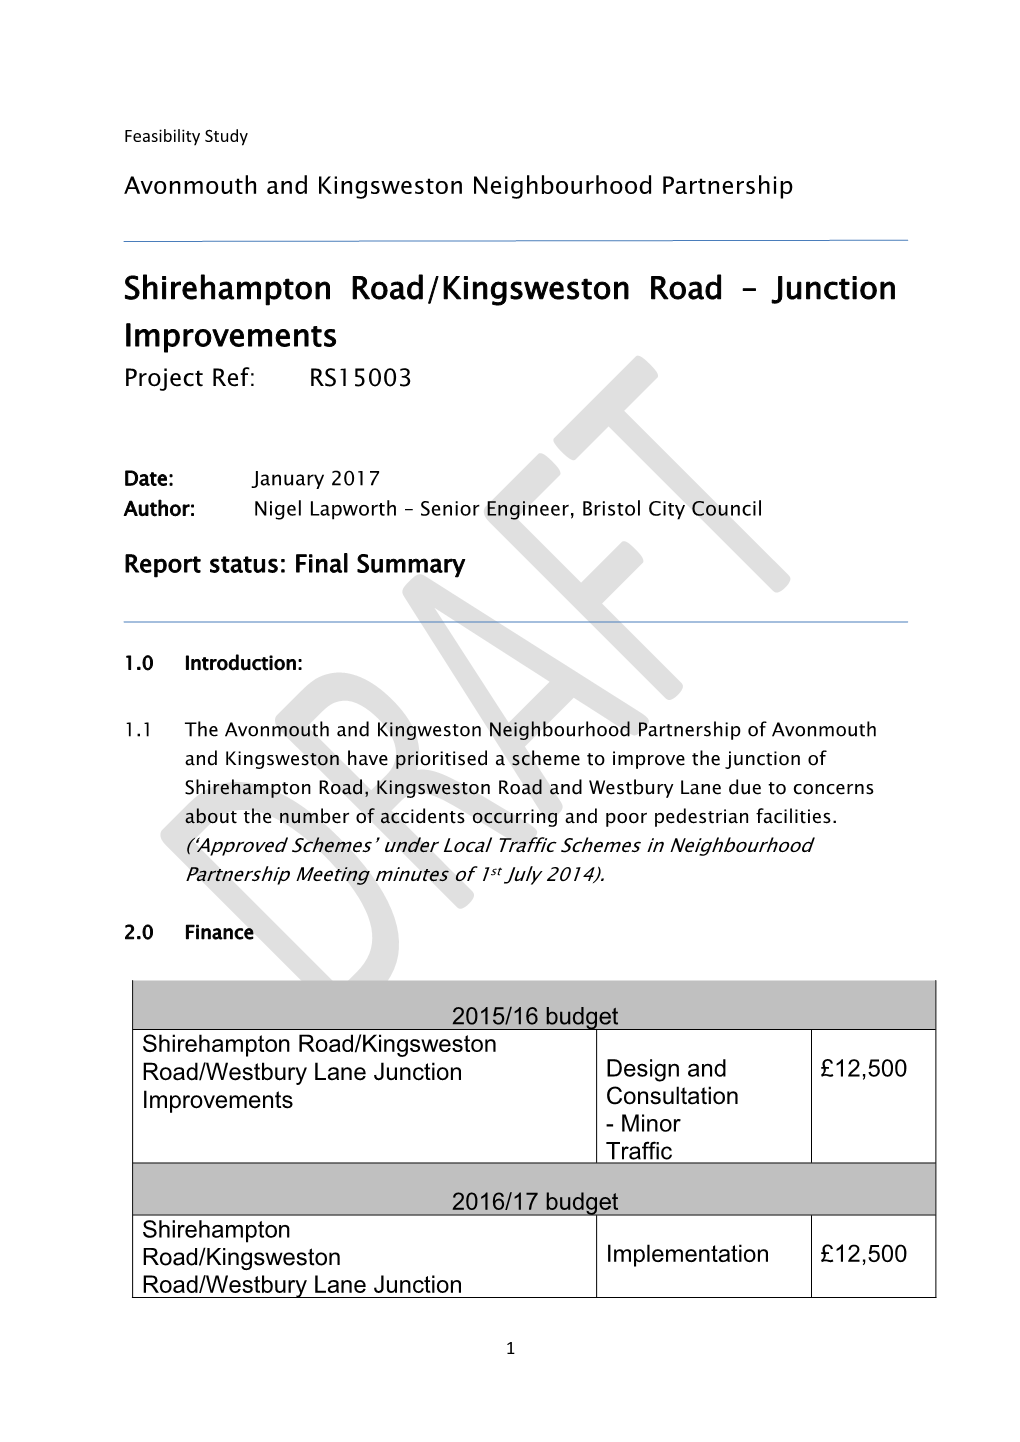 Shirehampton Road/Kingsweston Road – Junction Improvements Project Ref: RS15003